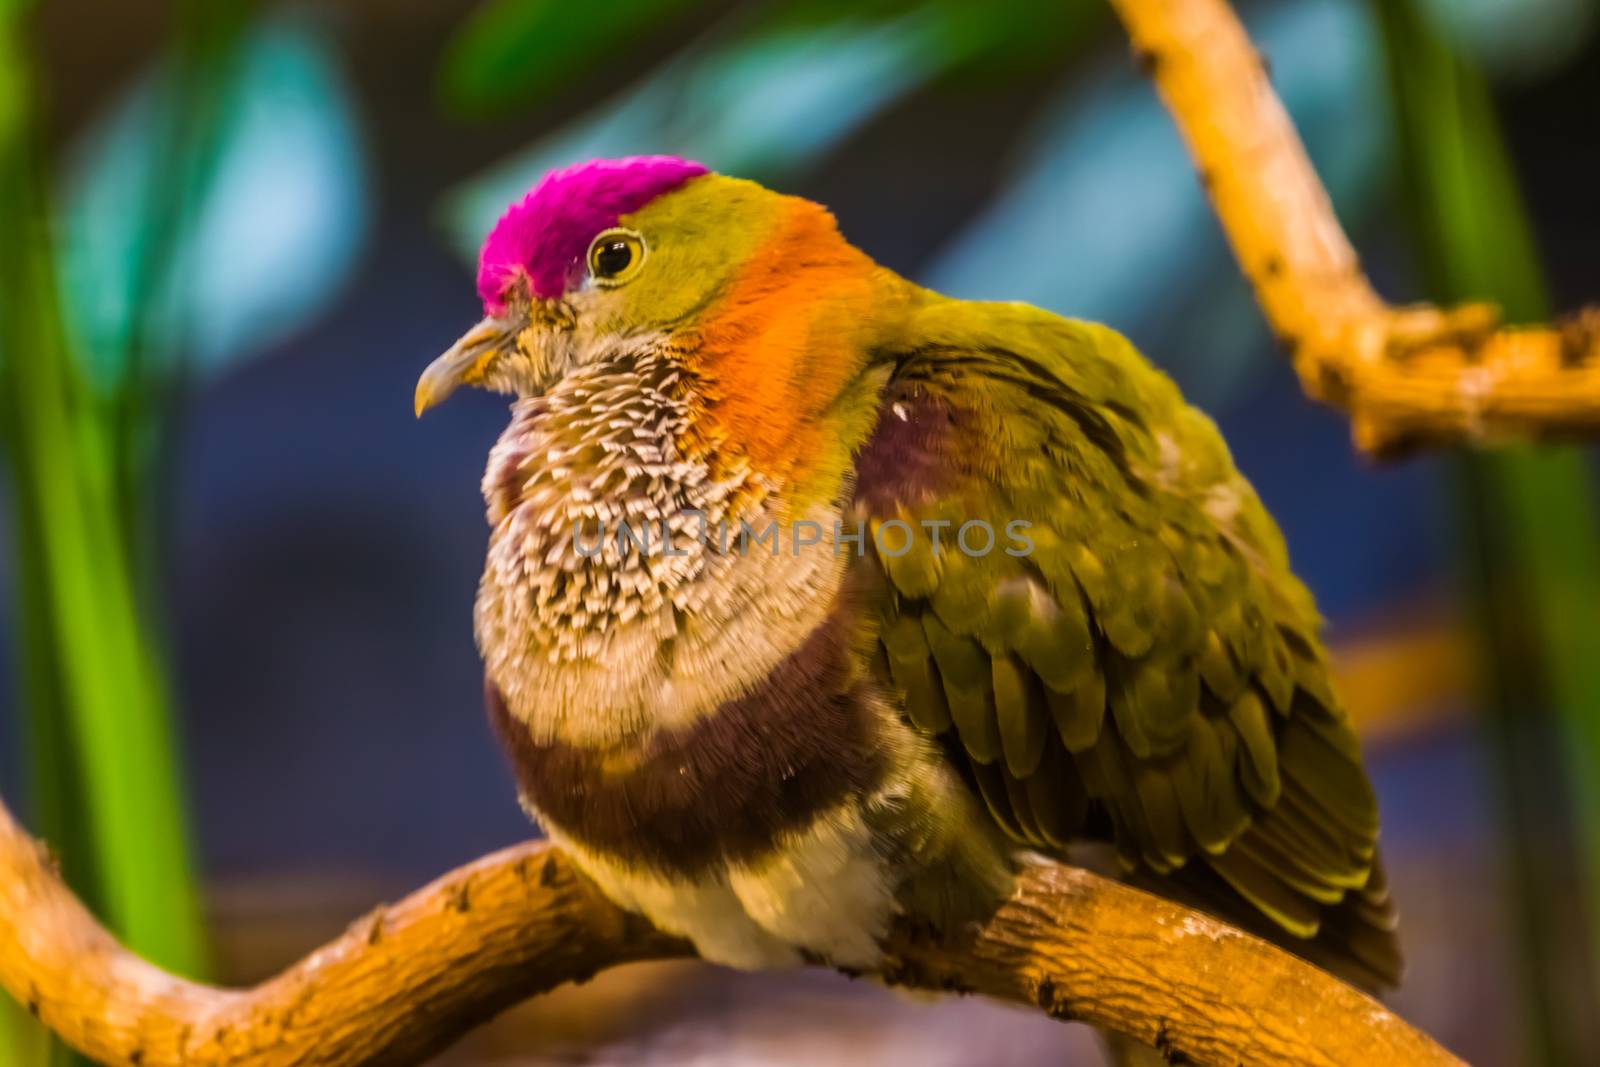 beautiful closeup portrait of a superb fruit dove, colorful tropical bird specie, popular pet in aviculture by charlottebleijenberg